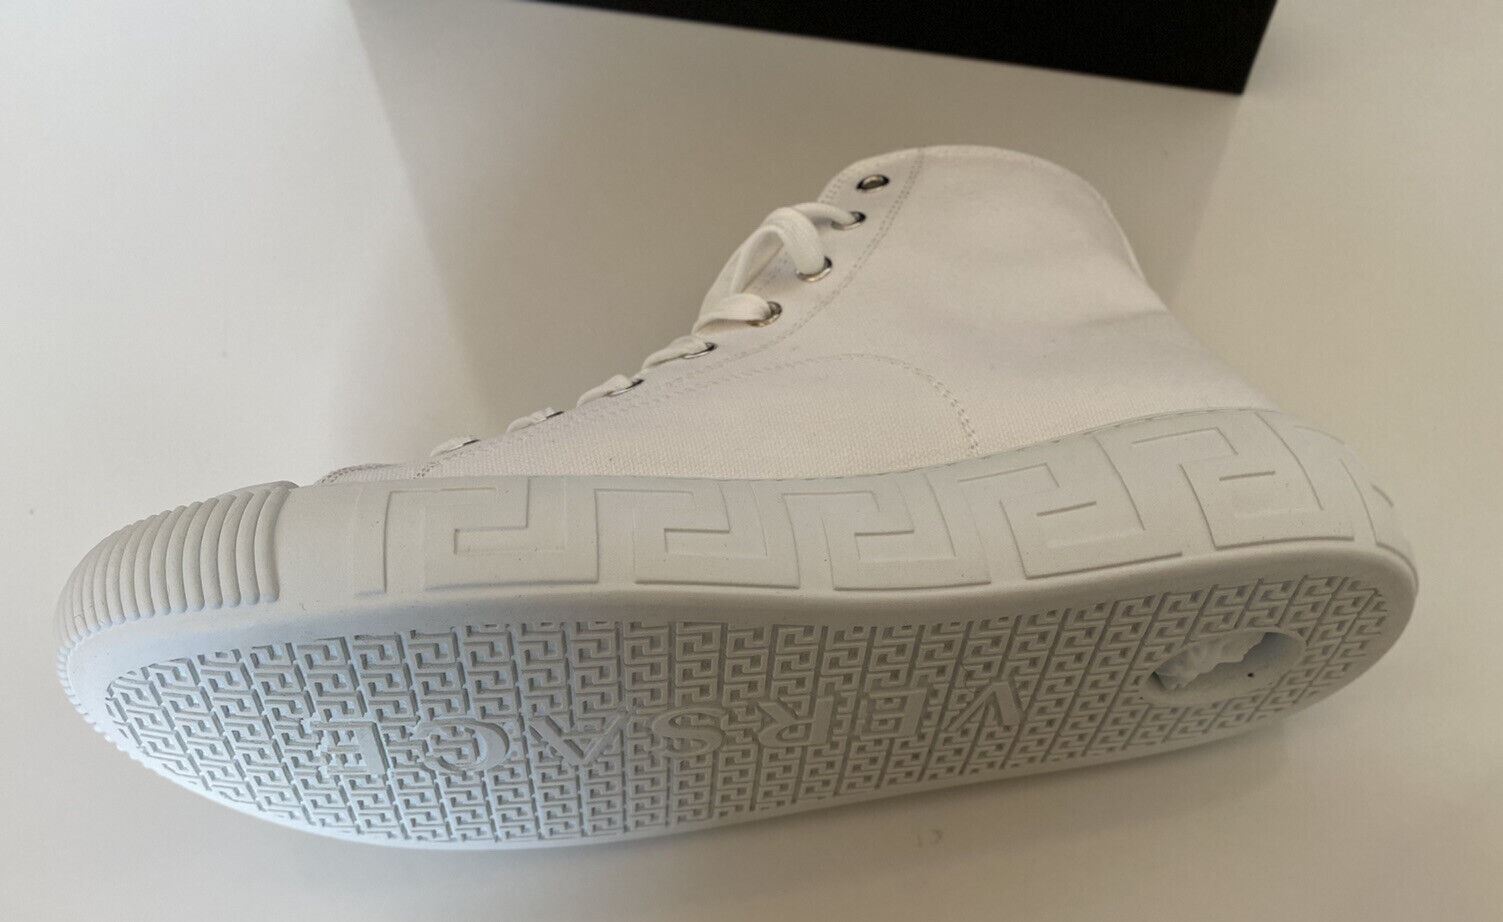 NIB Versace White Palladium High-Top Canvas Sneakers 10,5 US (43,5 Euro) DSU8403 